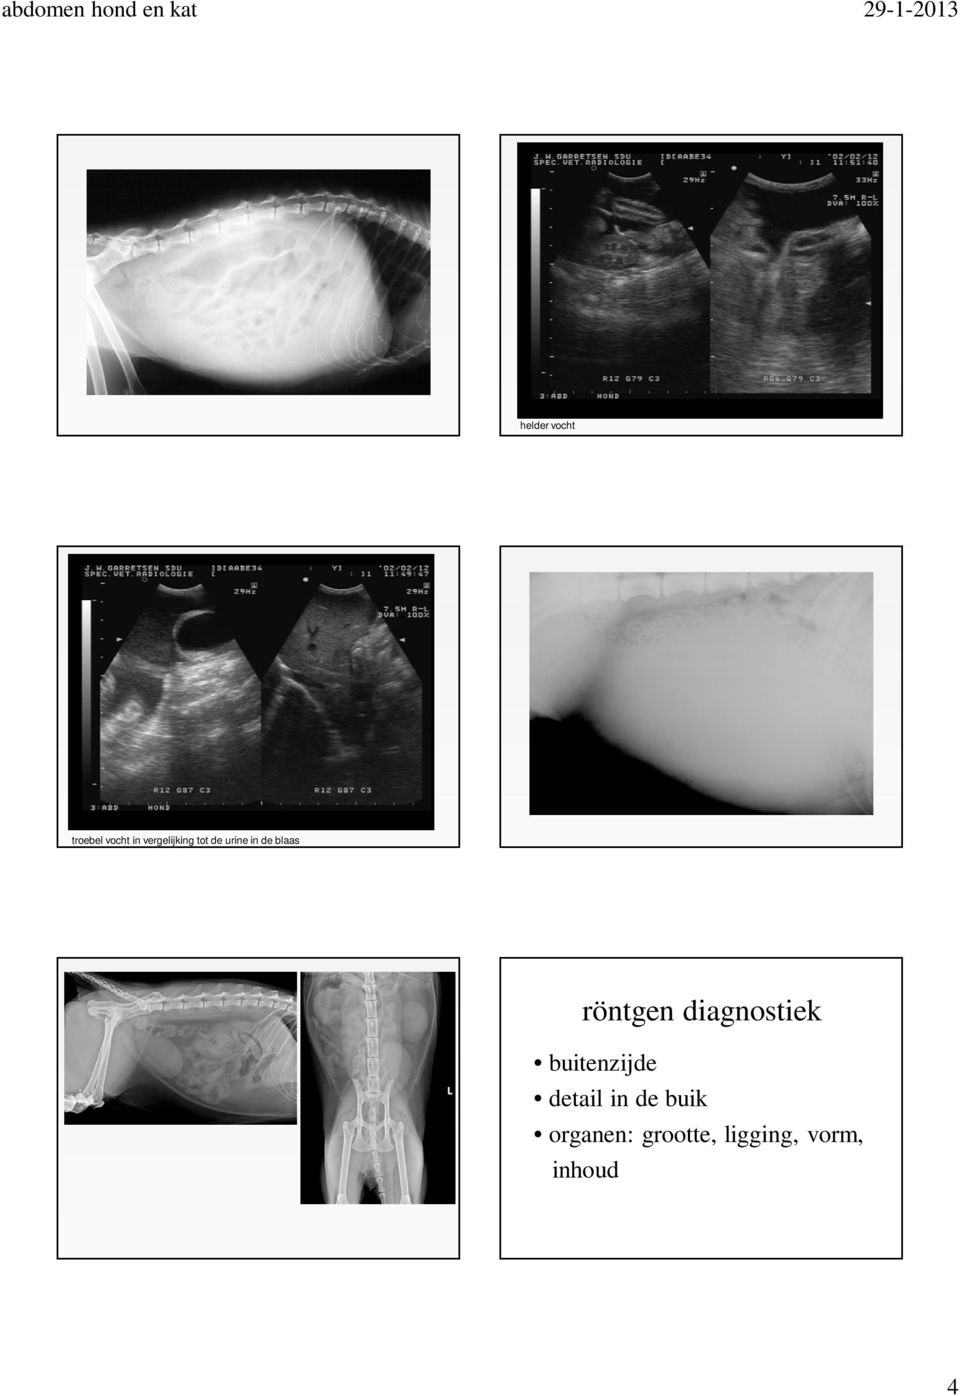 röntgen diagnostiek buitenzijde detail